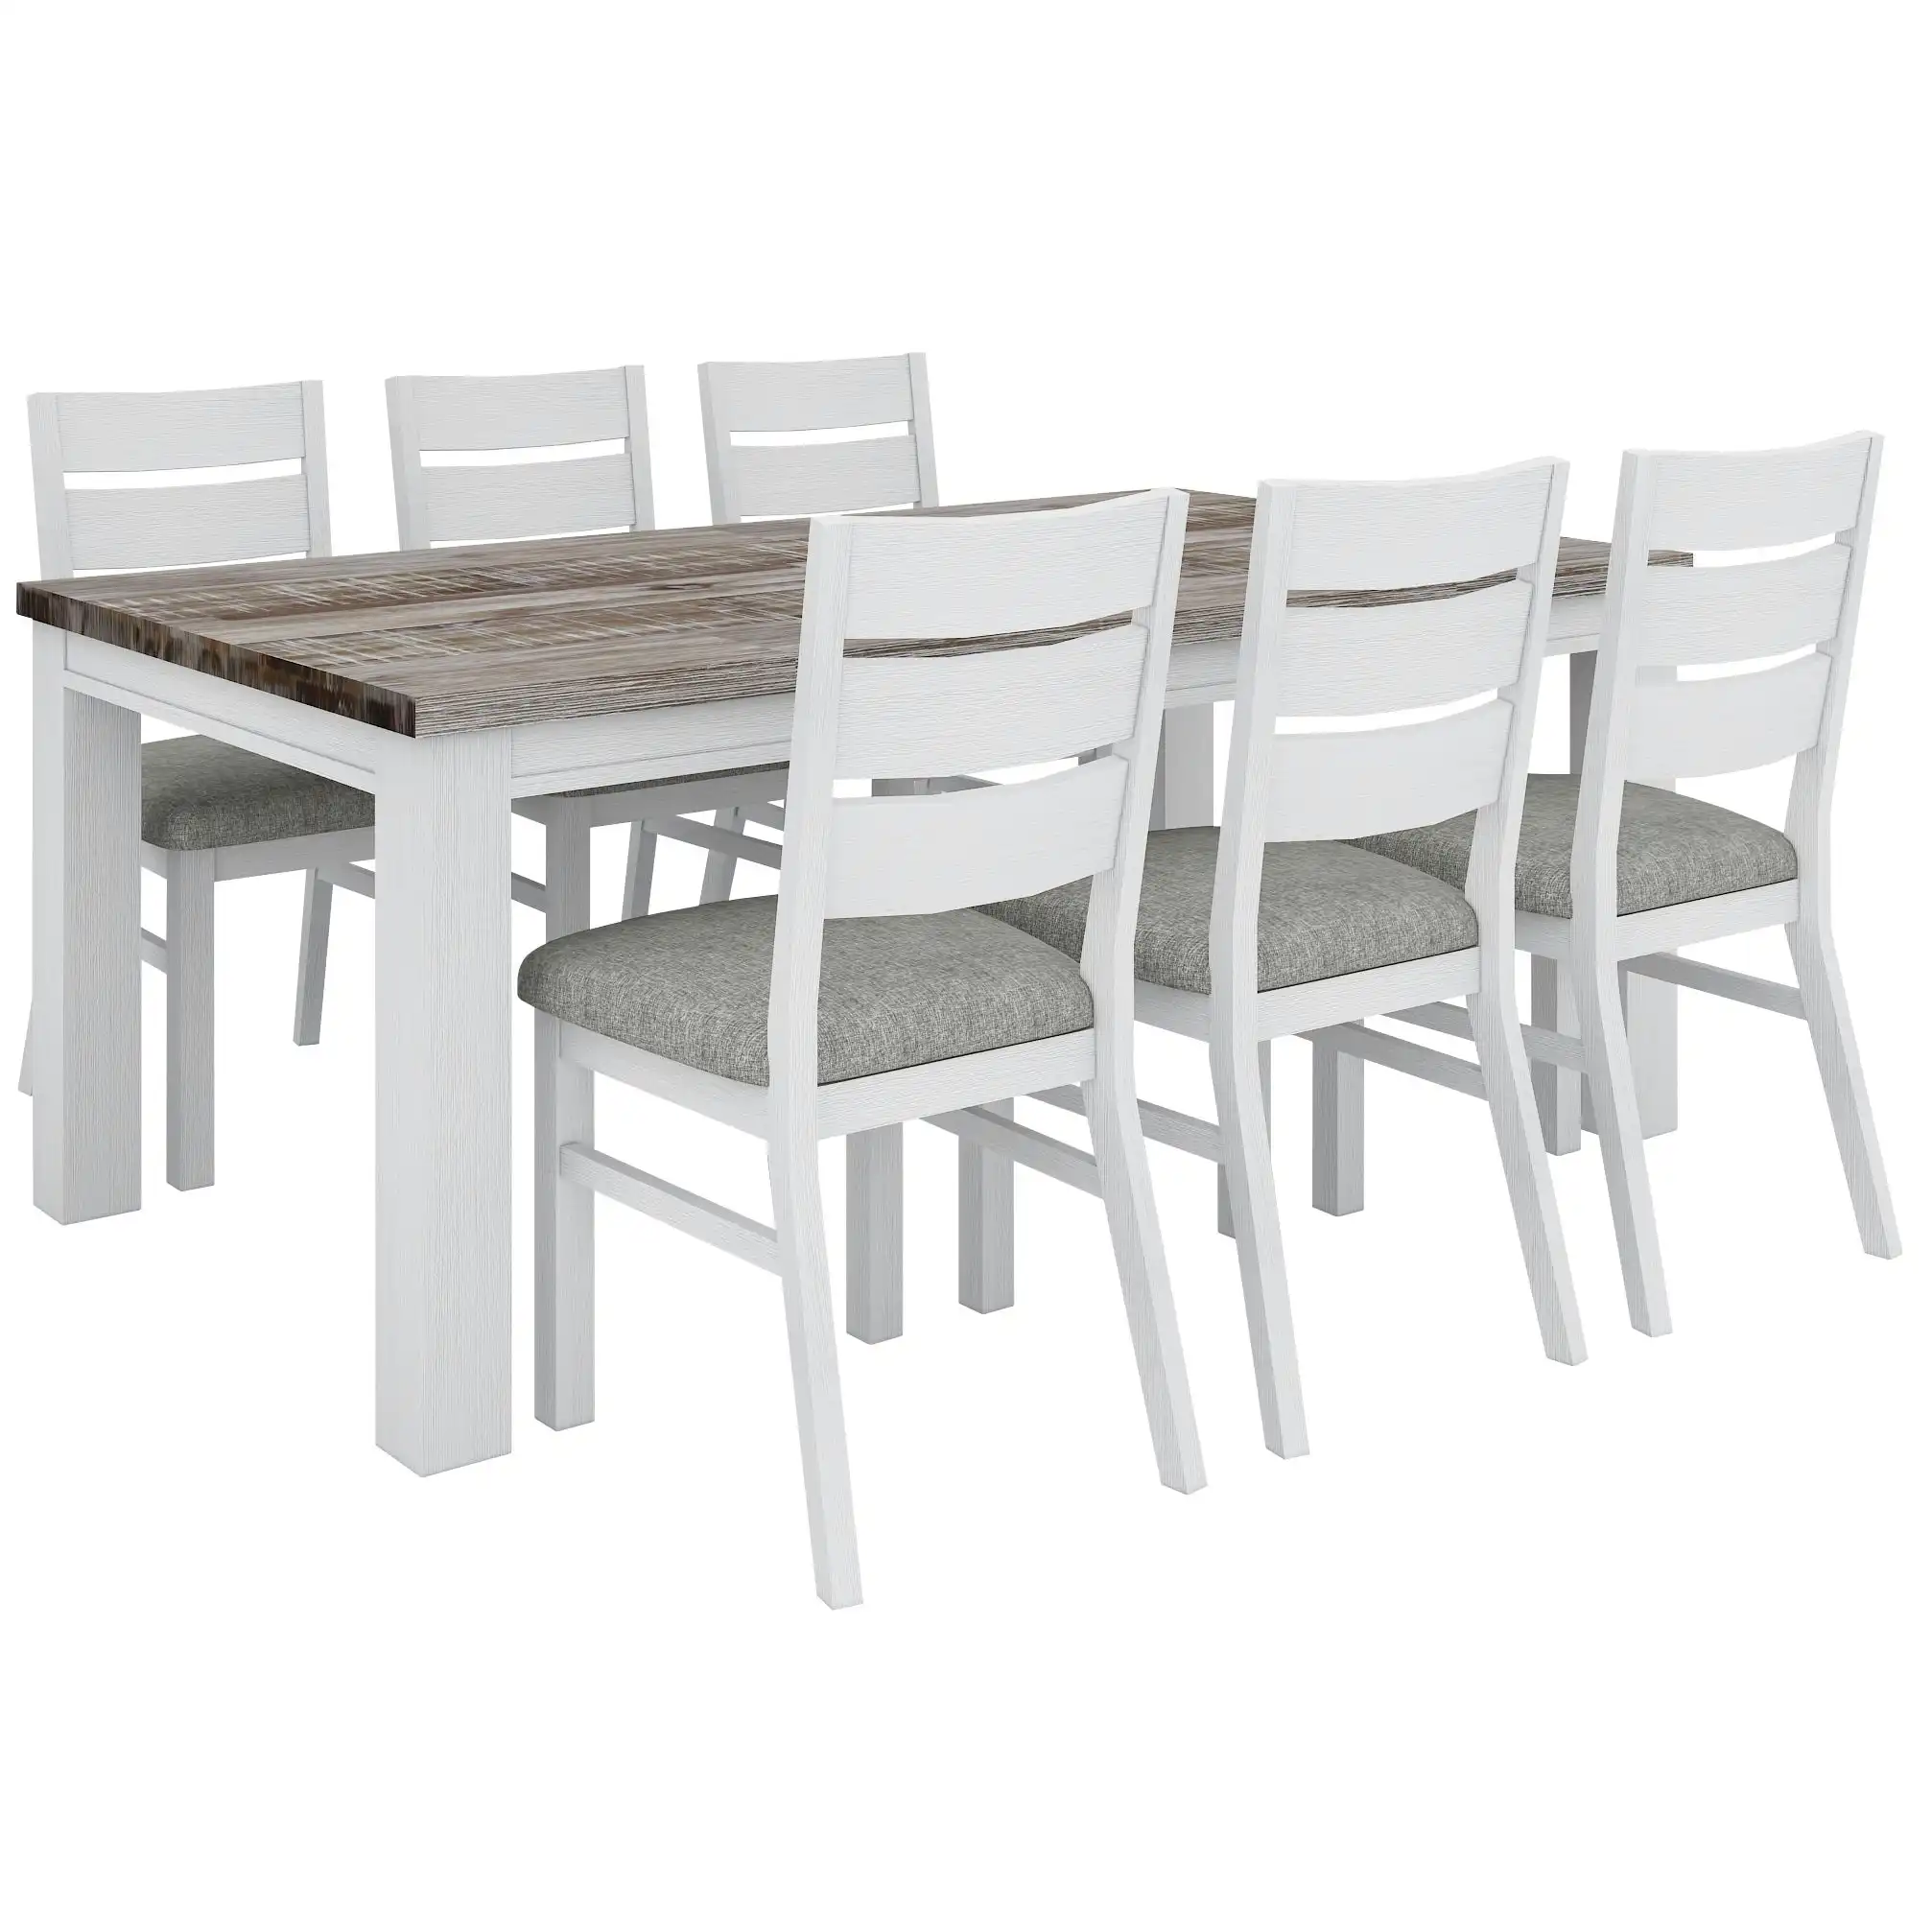 Plumeria 7pc Dining Table Chair Set